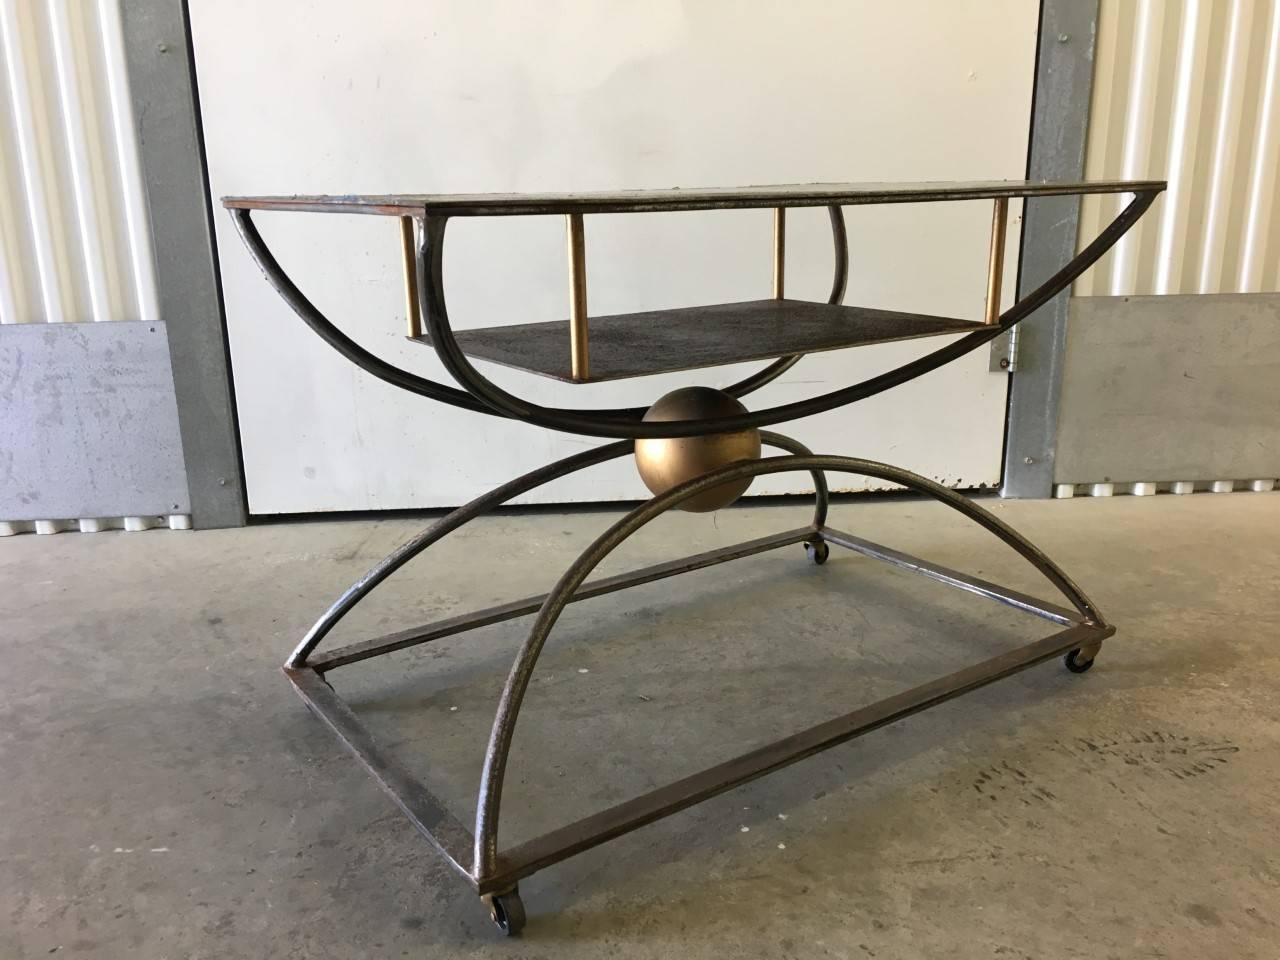 Postmodern artisan steel table/ entertainment unit on casters, 21st century.